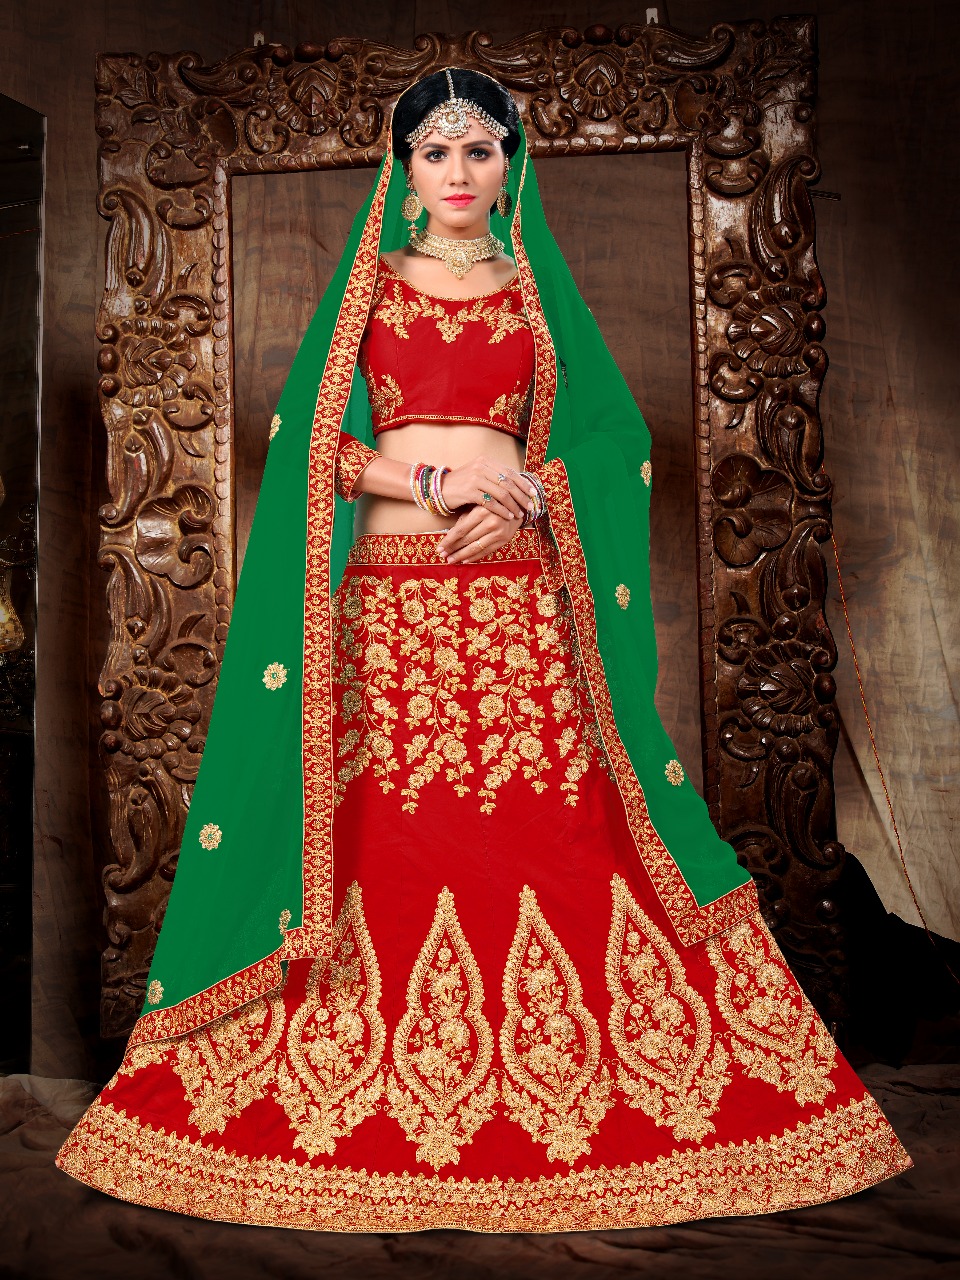 Majestic by sanskar sarees brings indidan wedding style lehenga